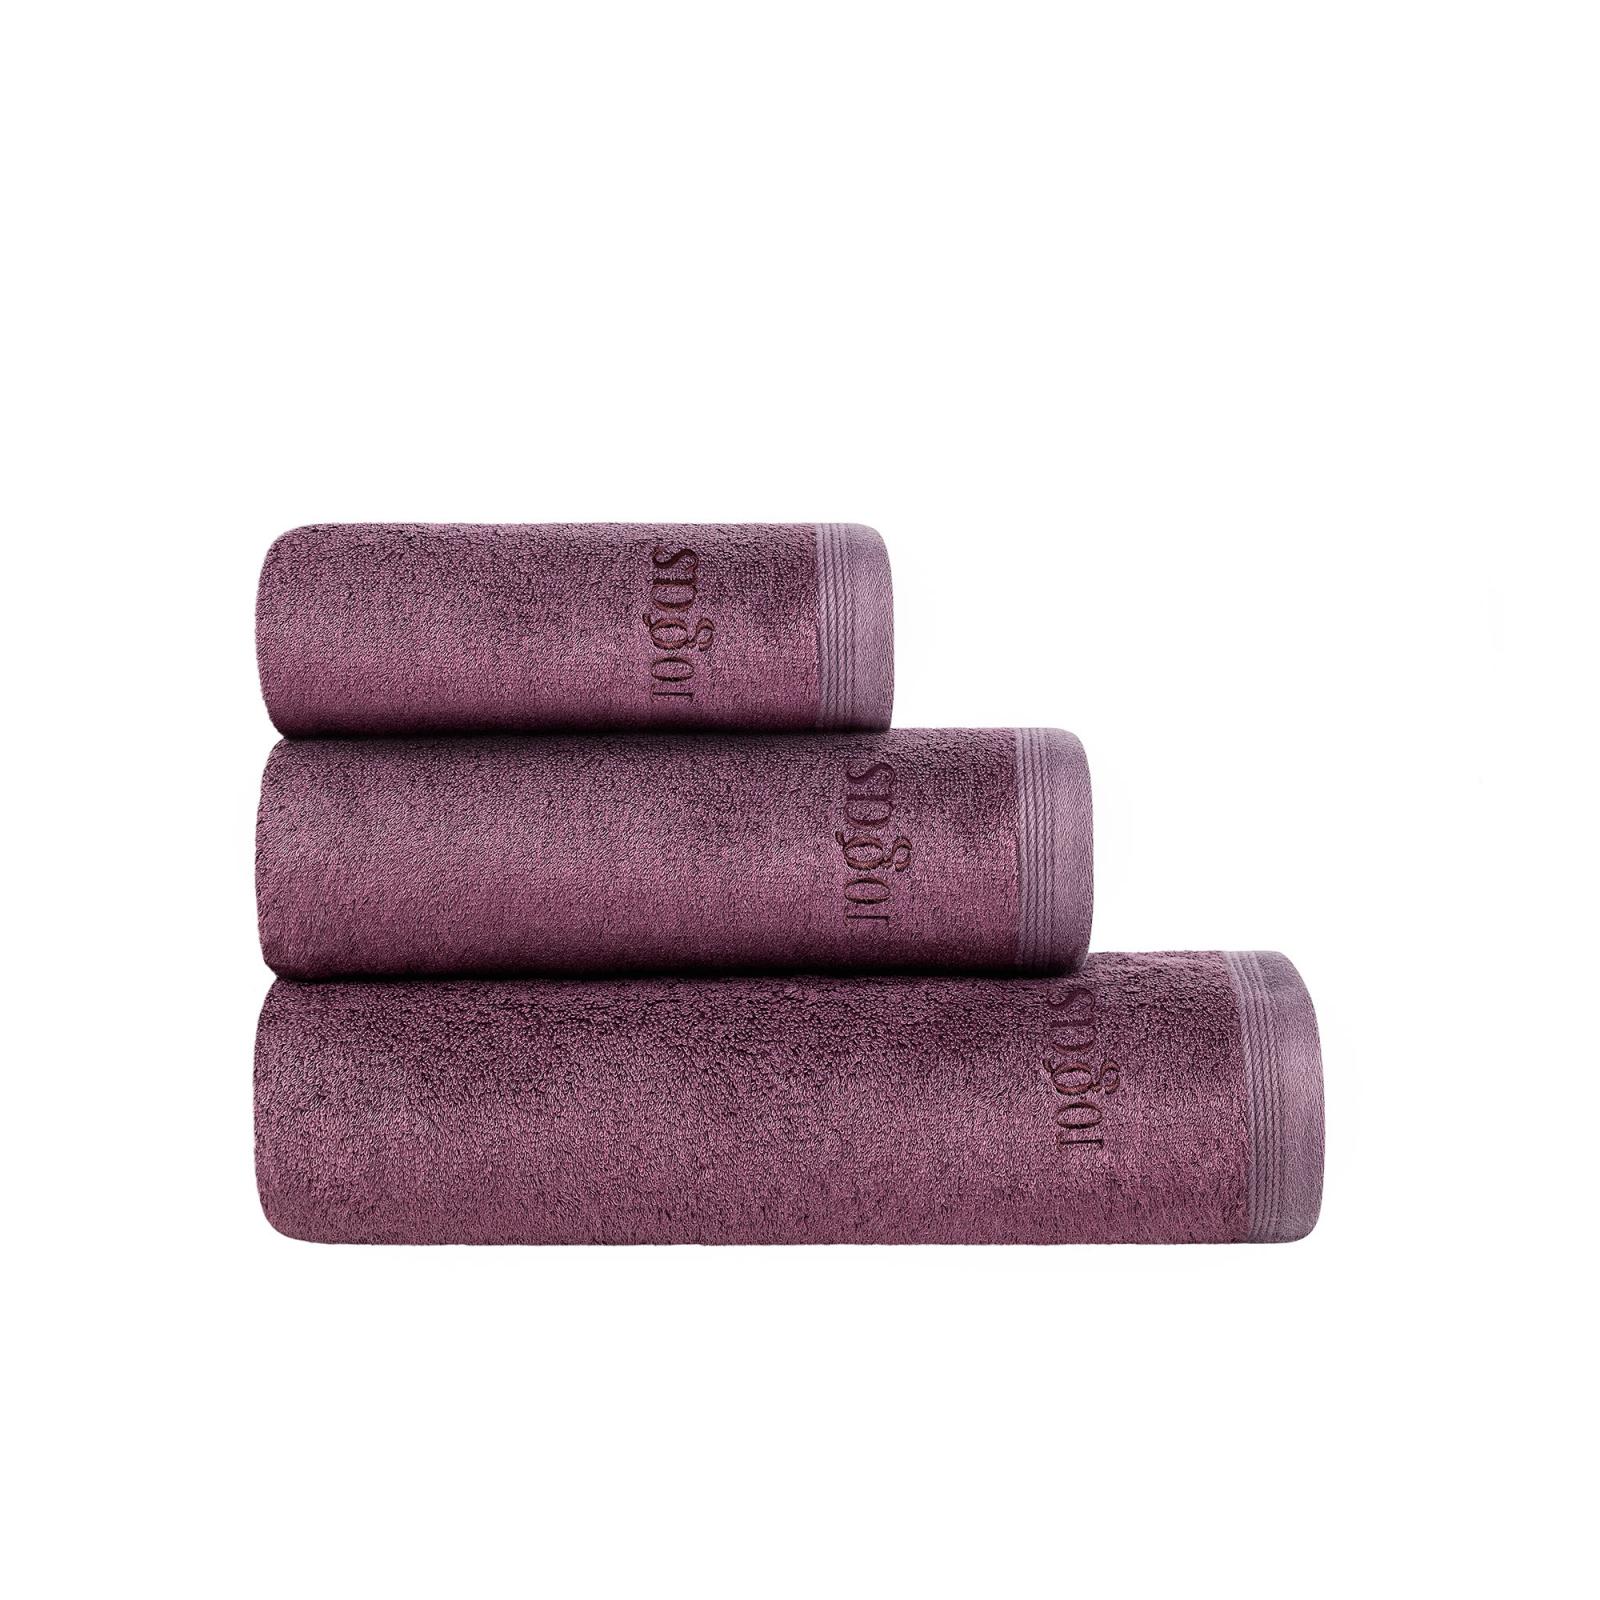 Полотенце 40х60 см Пуатье сливовое Togas полотенце togas пуатье светло лиловый 40х60 см